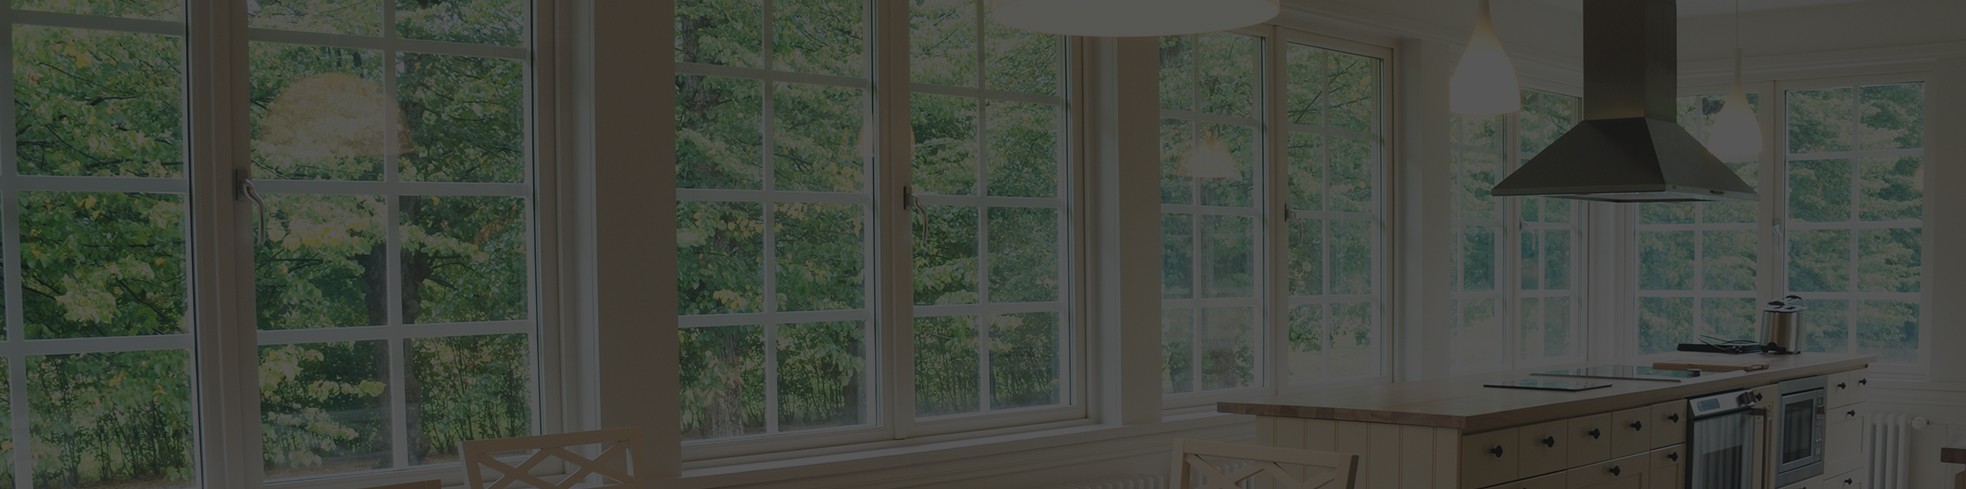 Richlin vinyl windows make your Wisconsin home beautiful